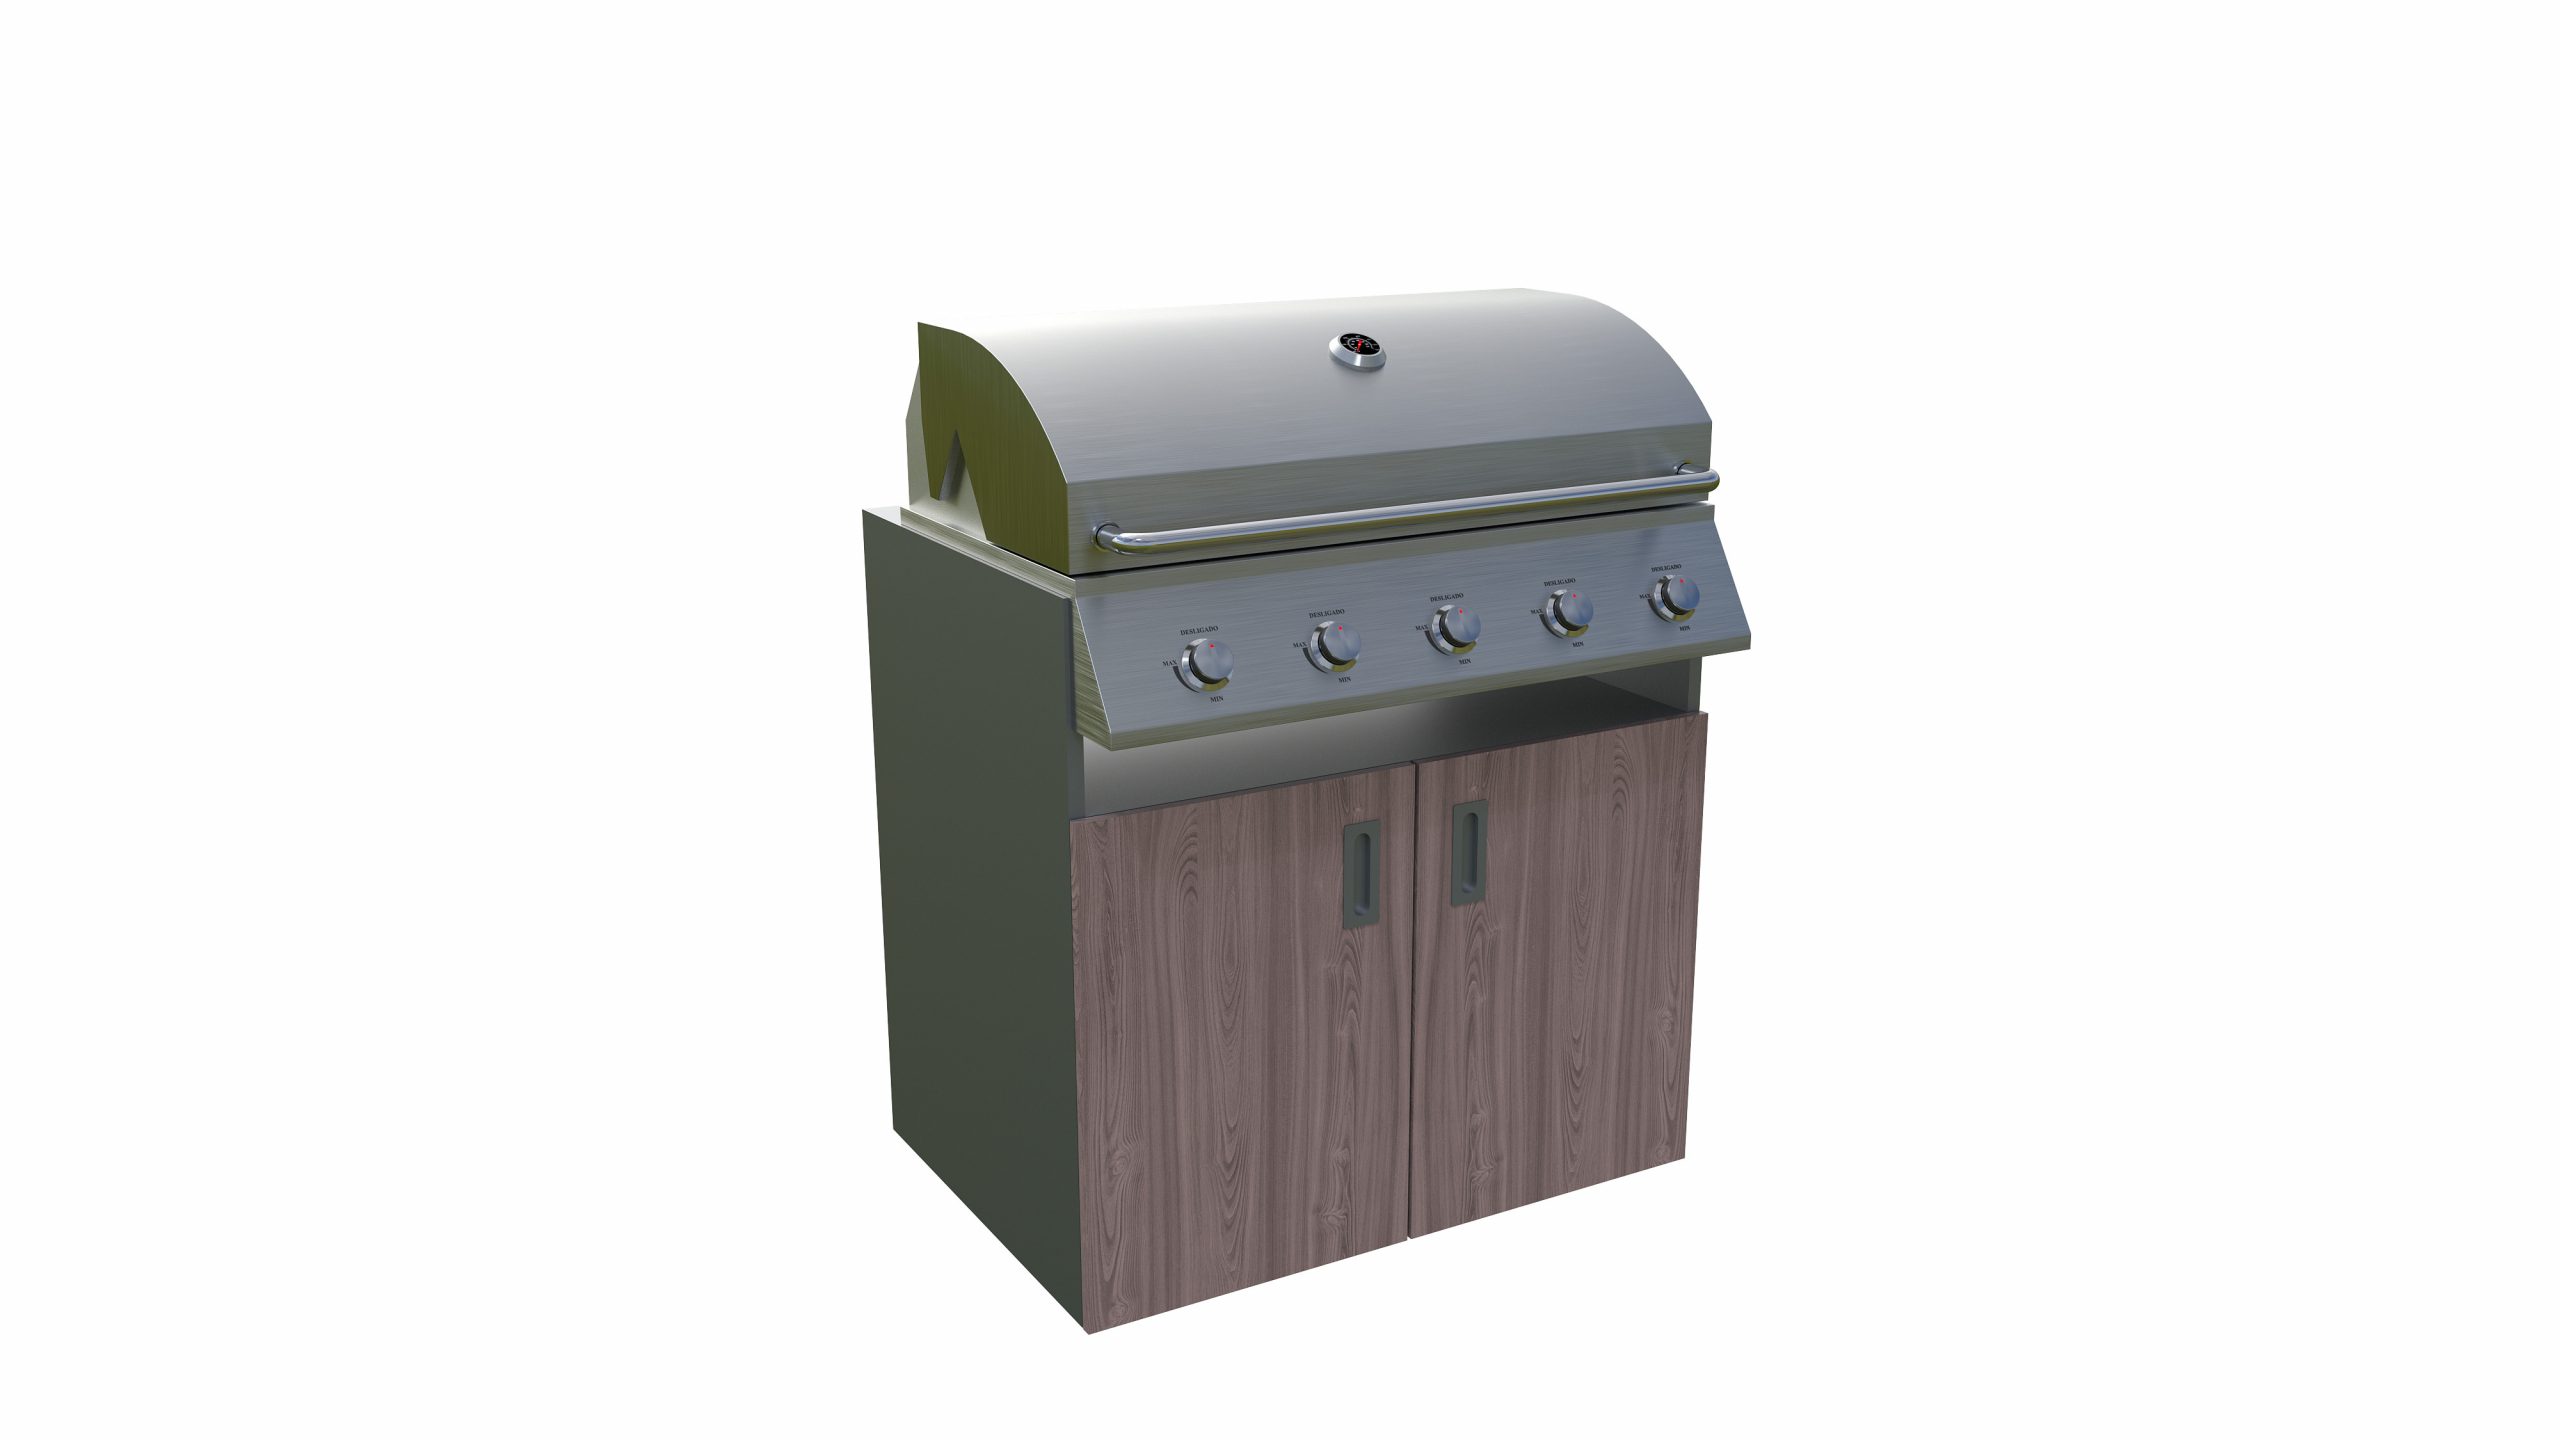 04  outdoor kueche element fuer grill amerikanische walnuss ms viscom scaled - Outdoorküche Edelstahl -  Grillelement Holzdekor